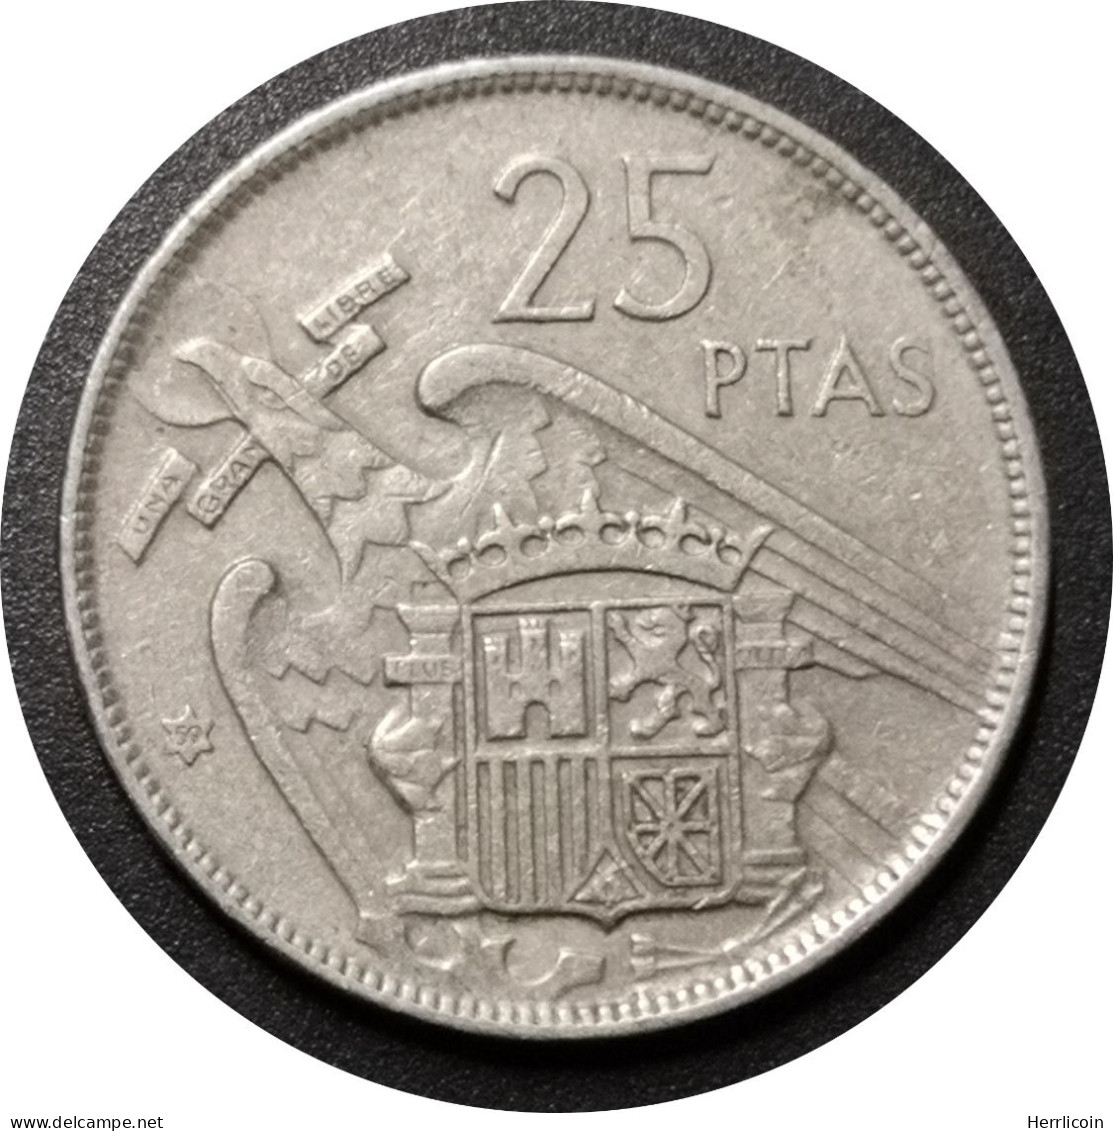 Monnaie Espagne - 1959 (1957) - 25 Pesetas Franco - 25 Pesetas